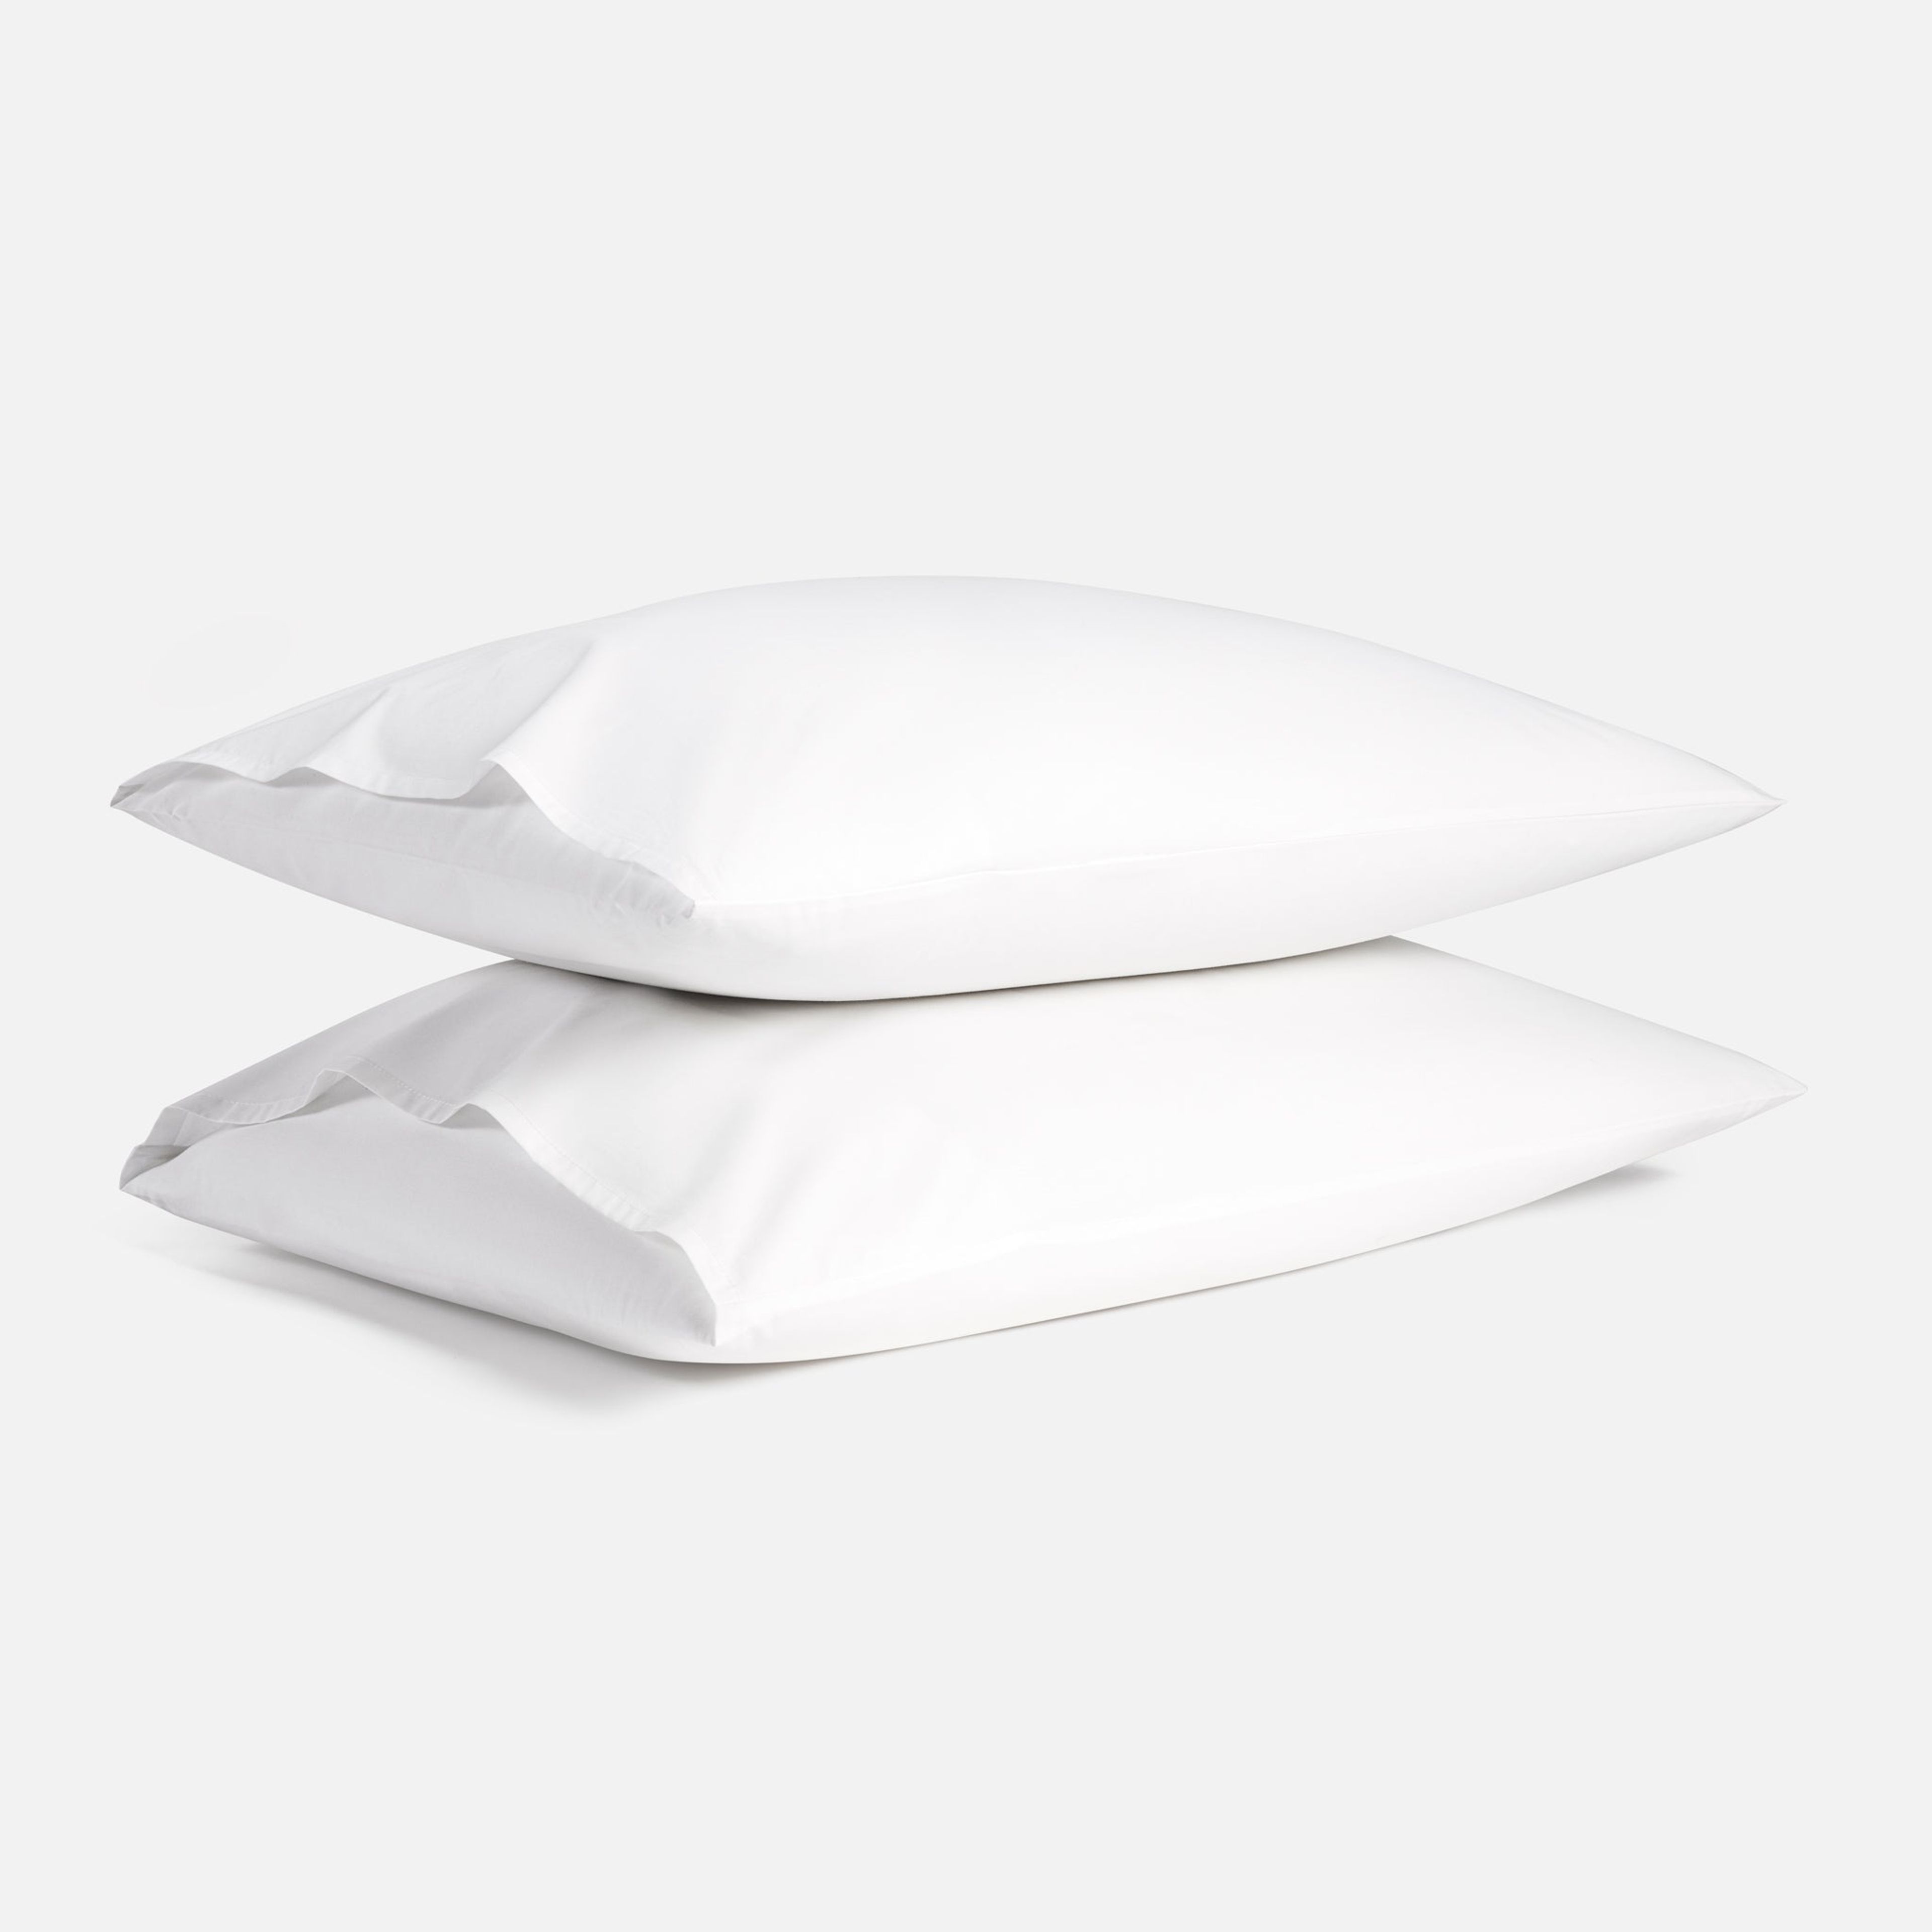 Luxe Sateen Pillowcases